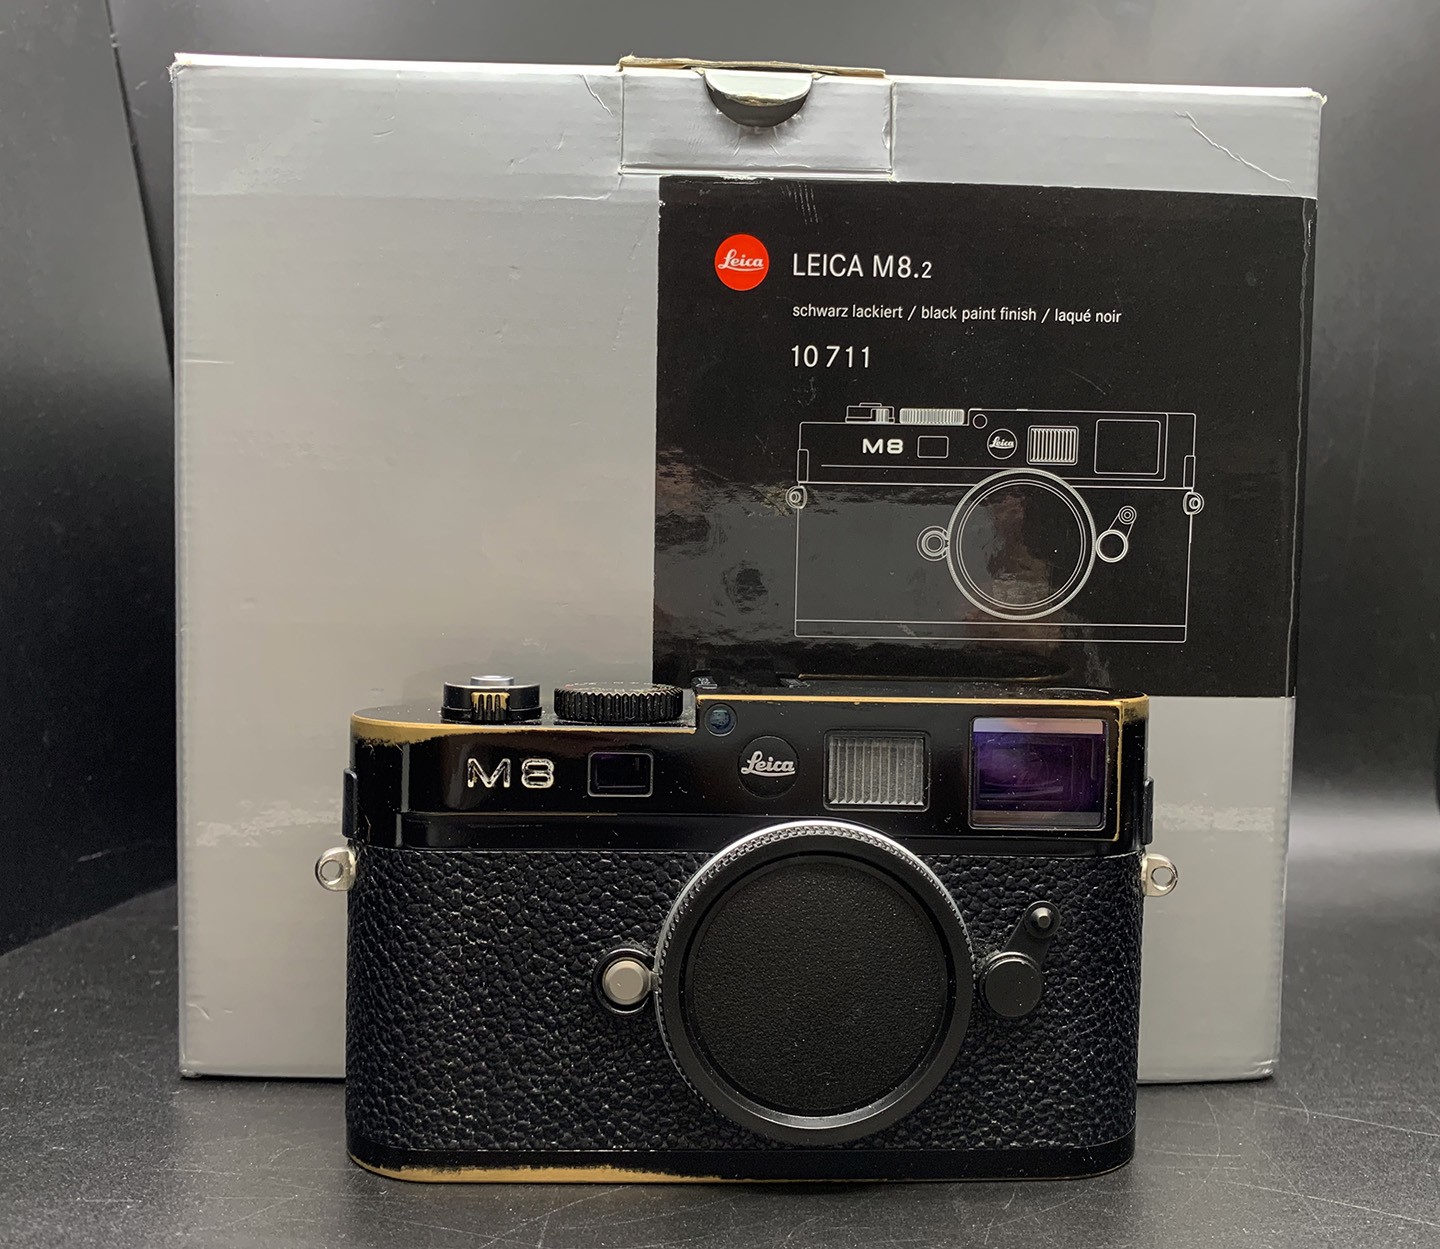 Leica M8.2 Digital Camera Black Paint Finish - meteor